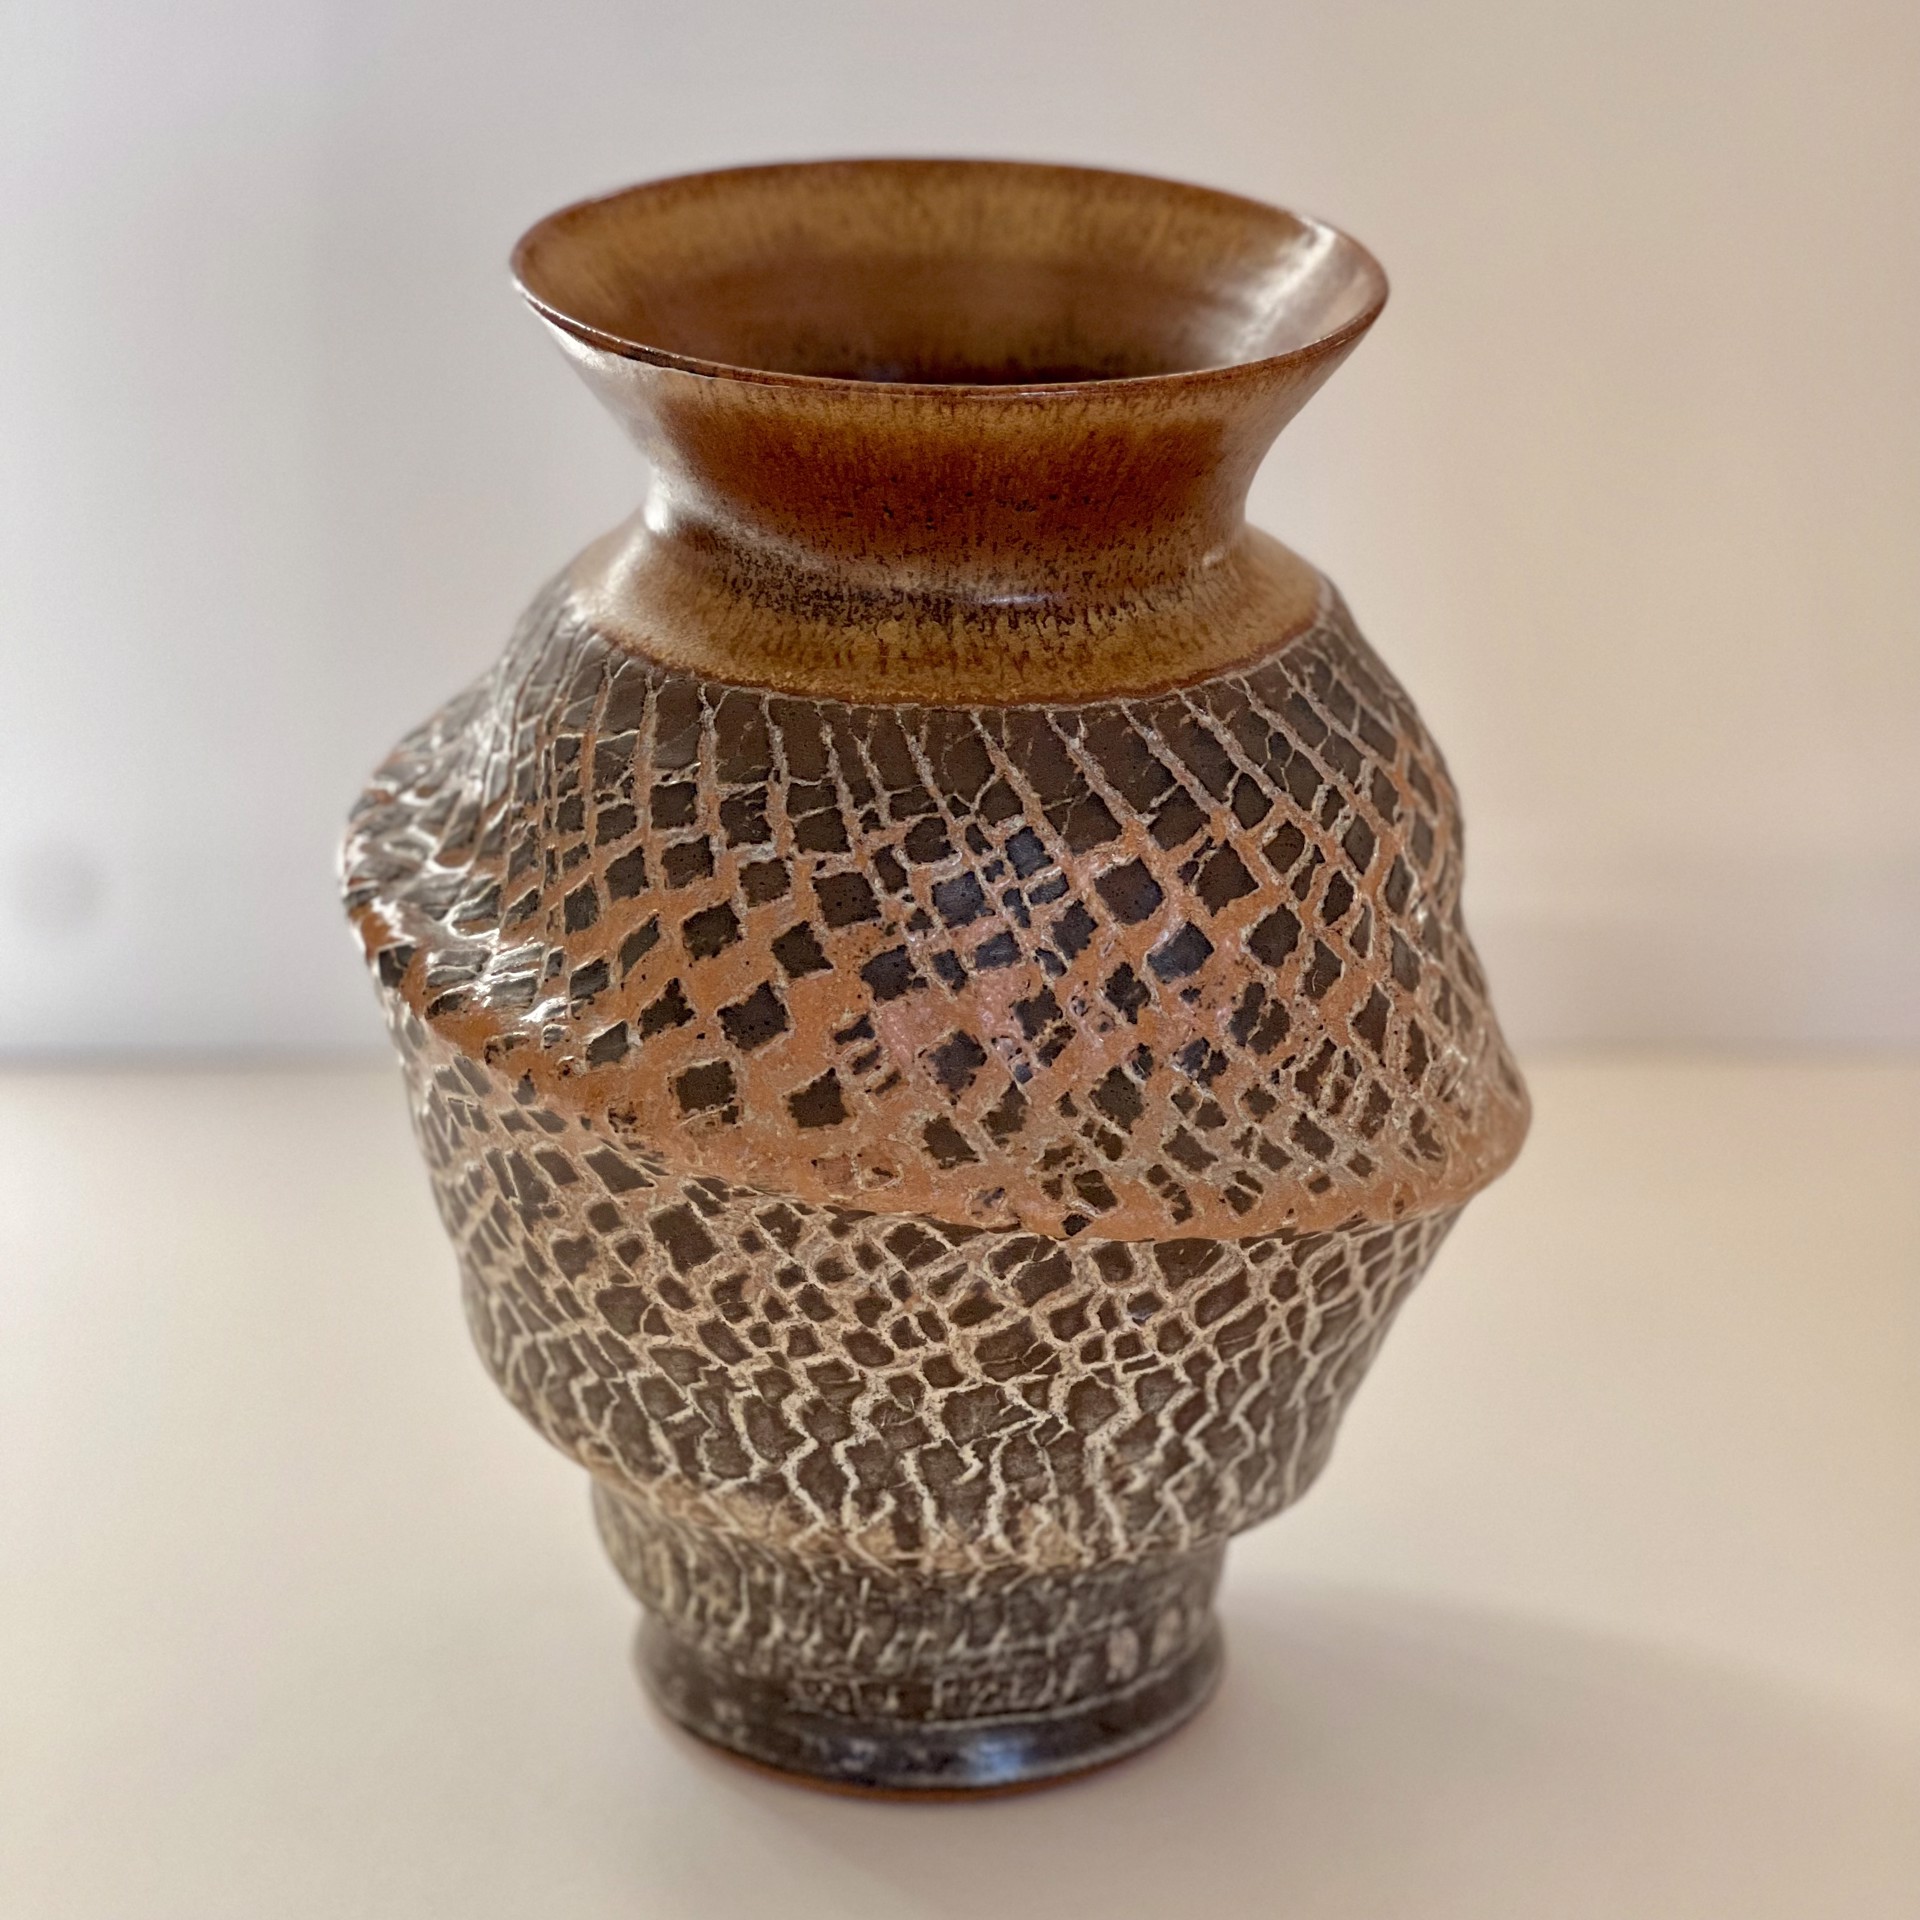 Vase 12 by David LaLomia